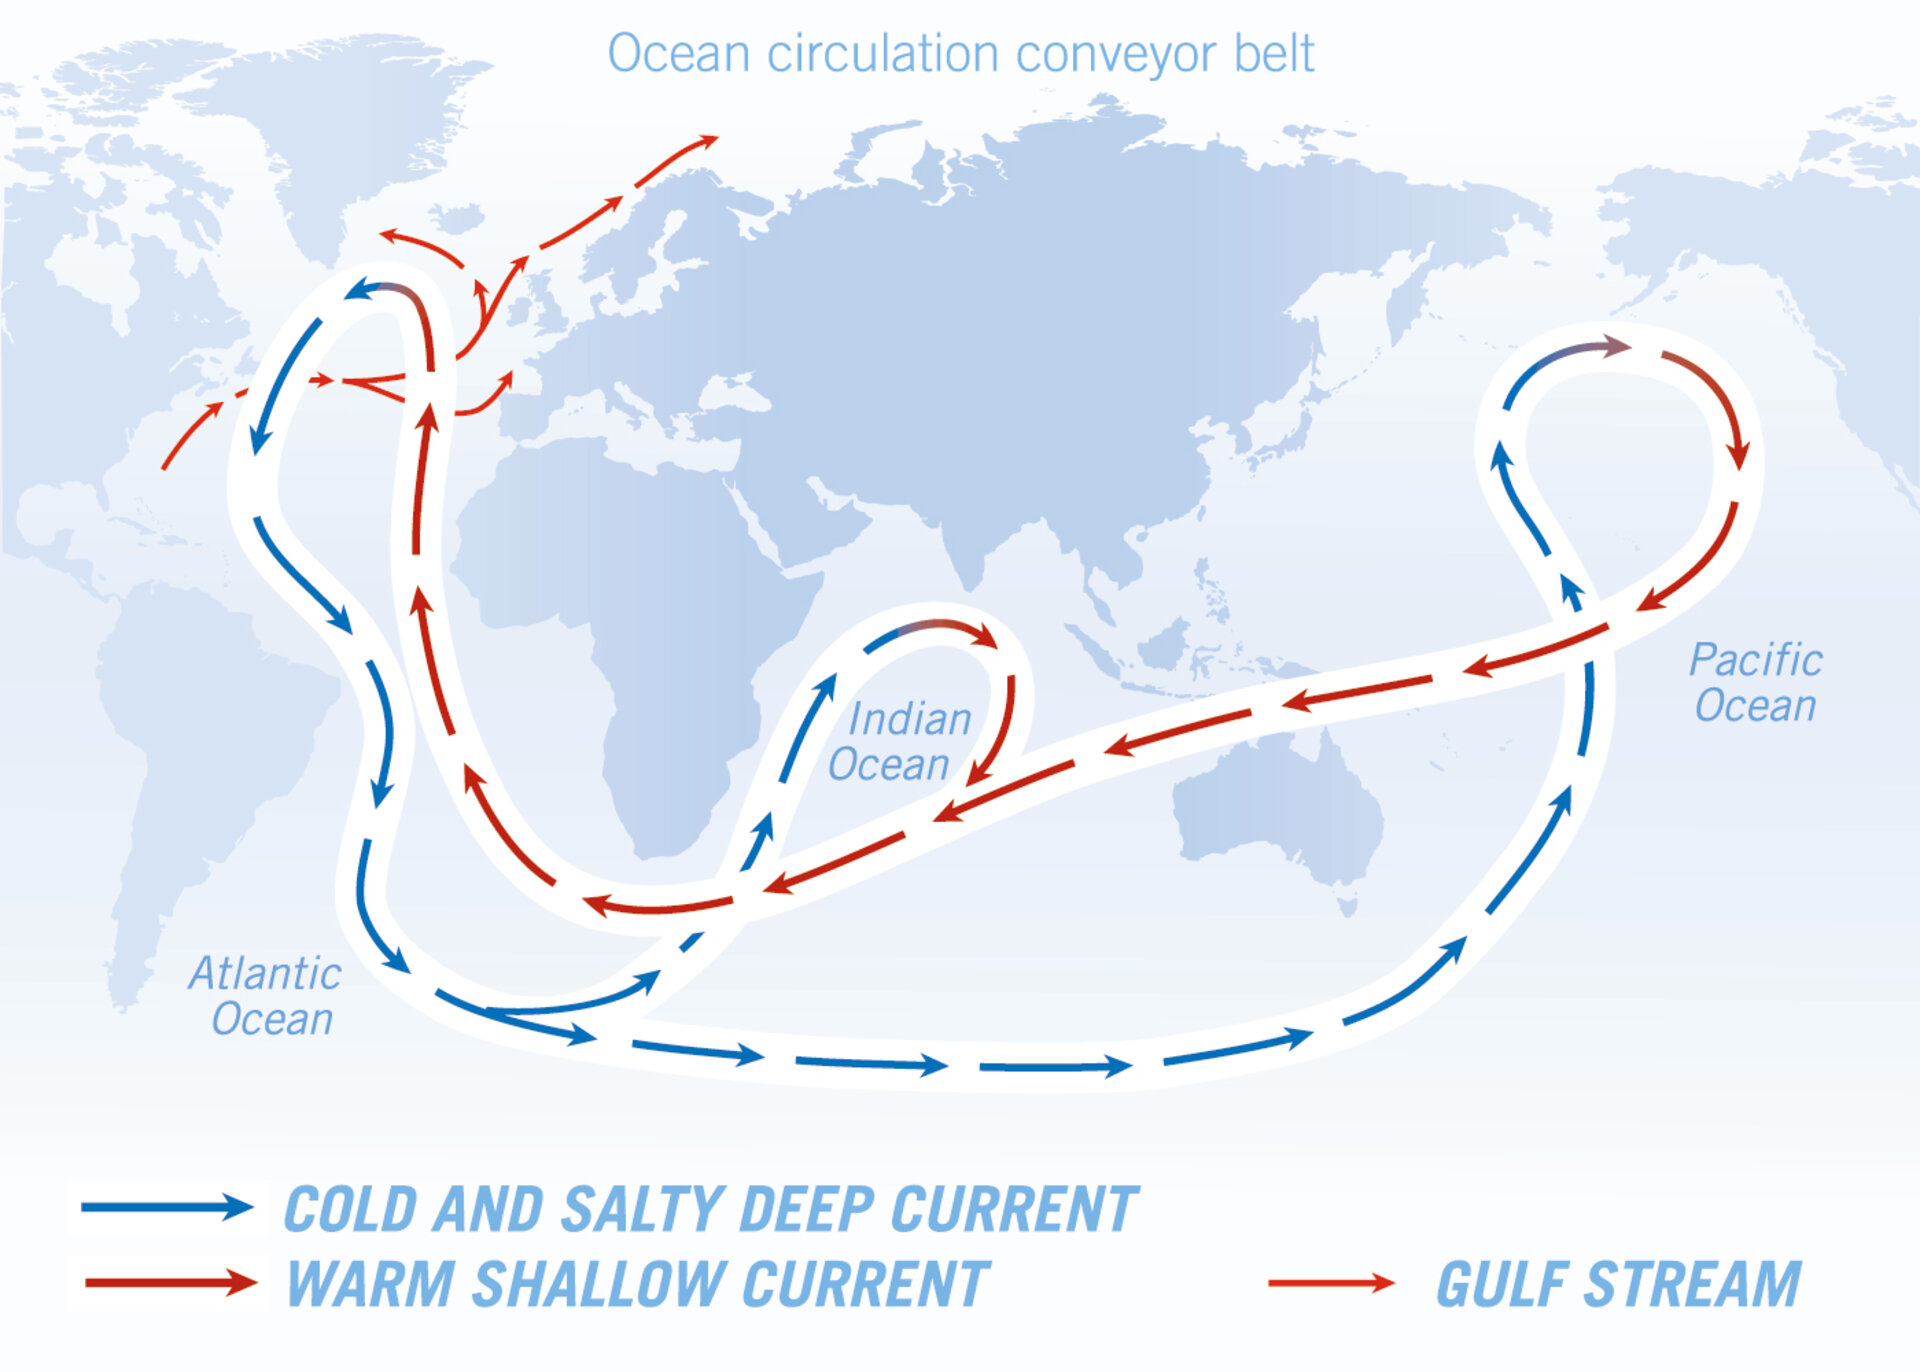 Ocean circulation conveyor belt